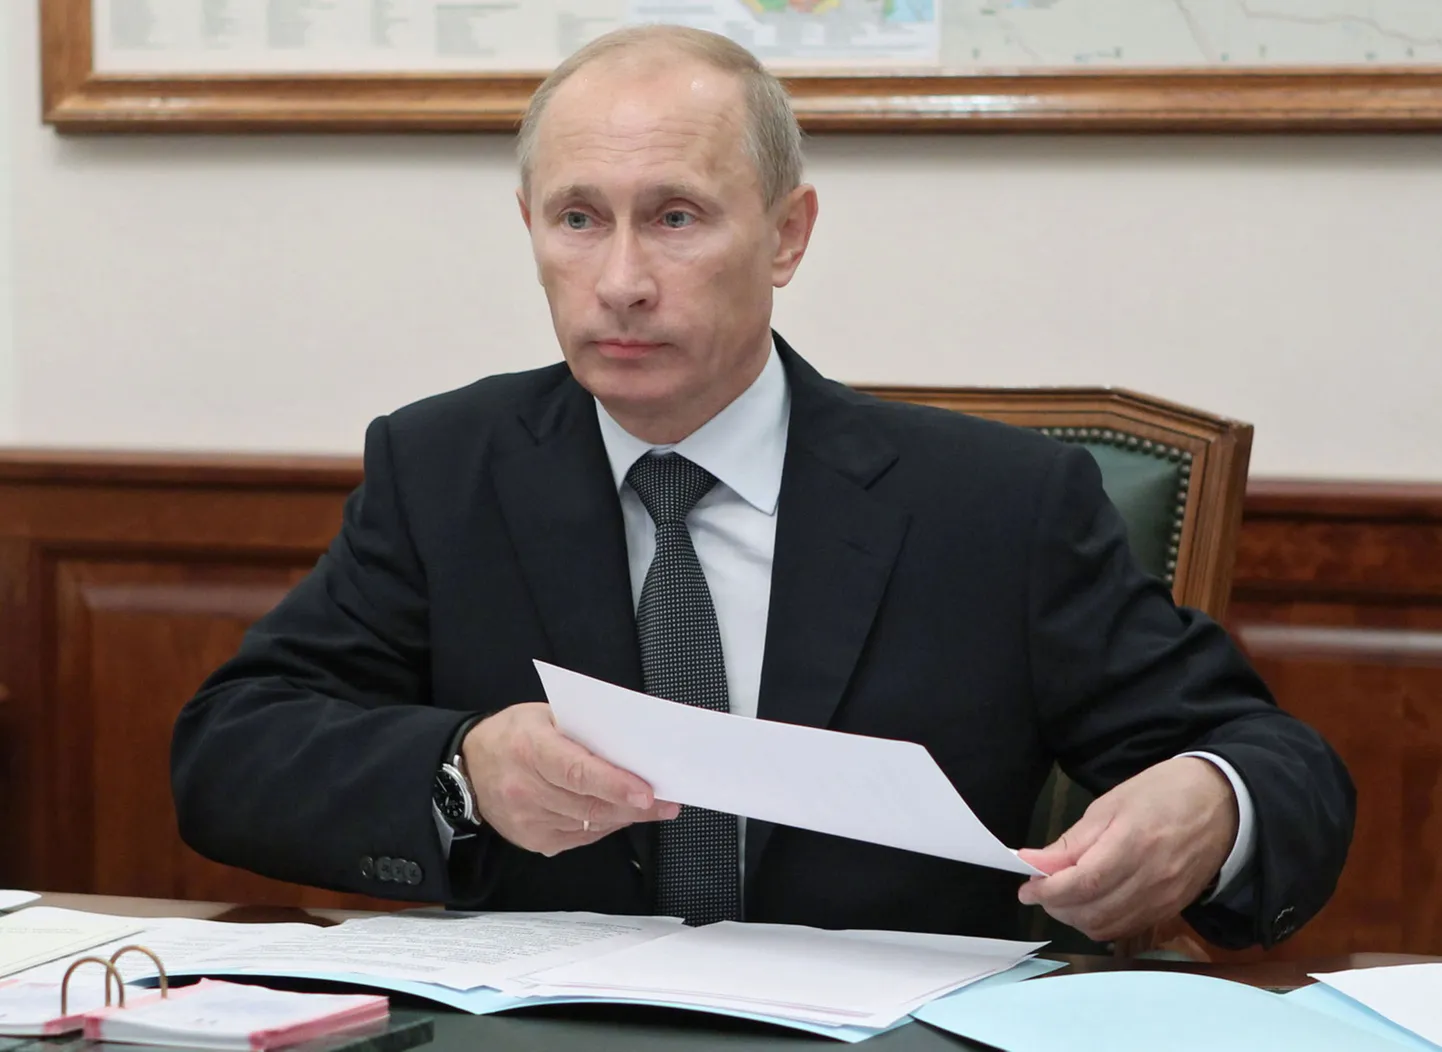 Venemaa peaminister Vladimir Putin